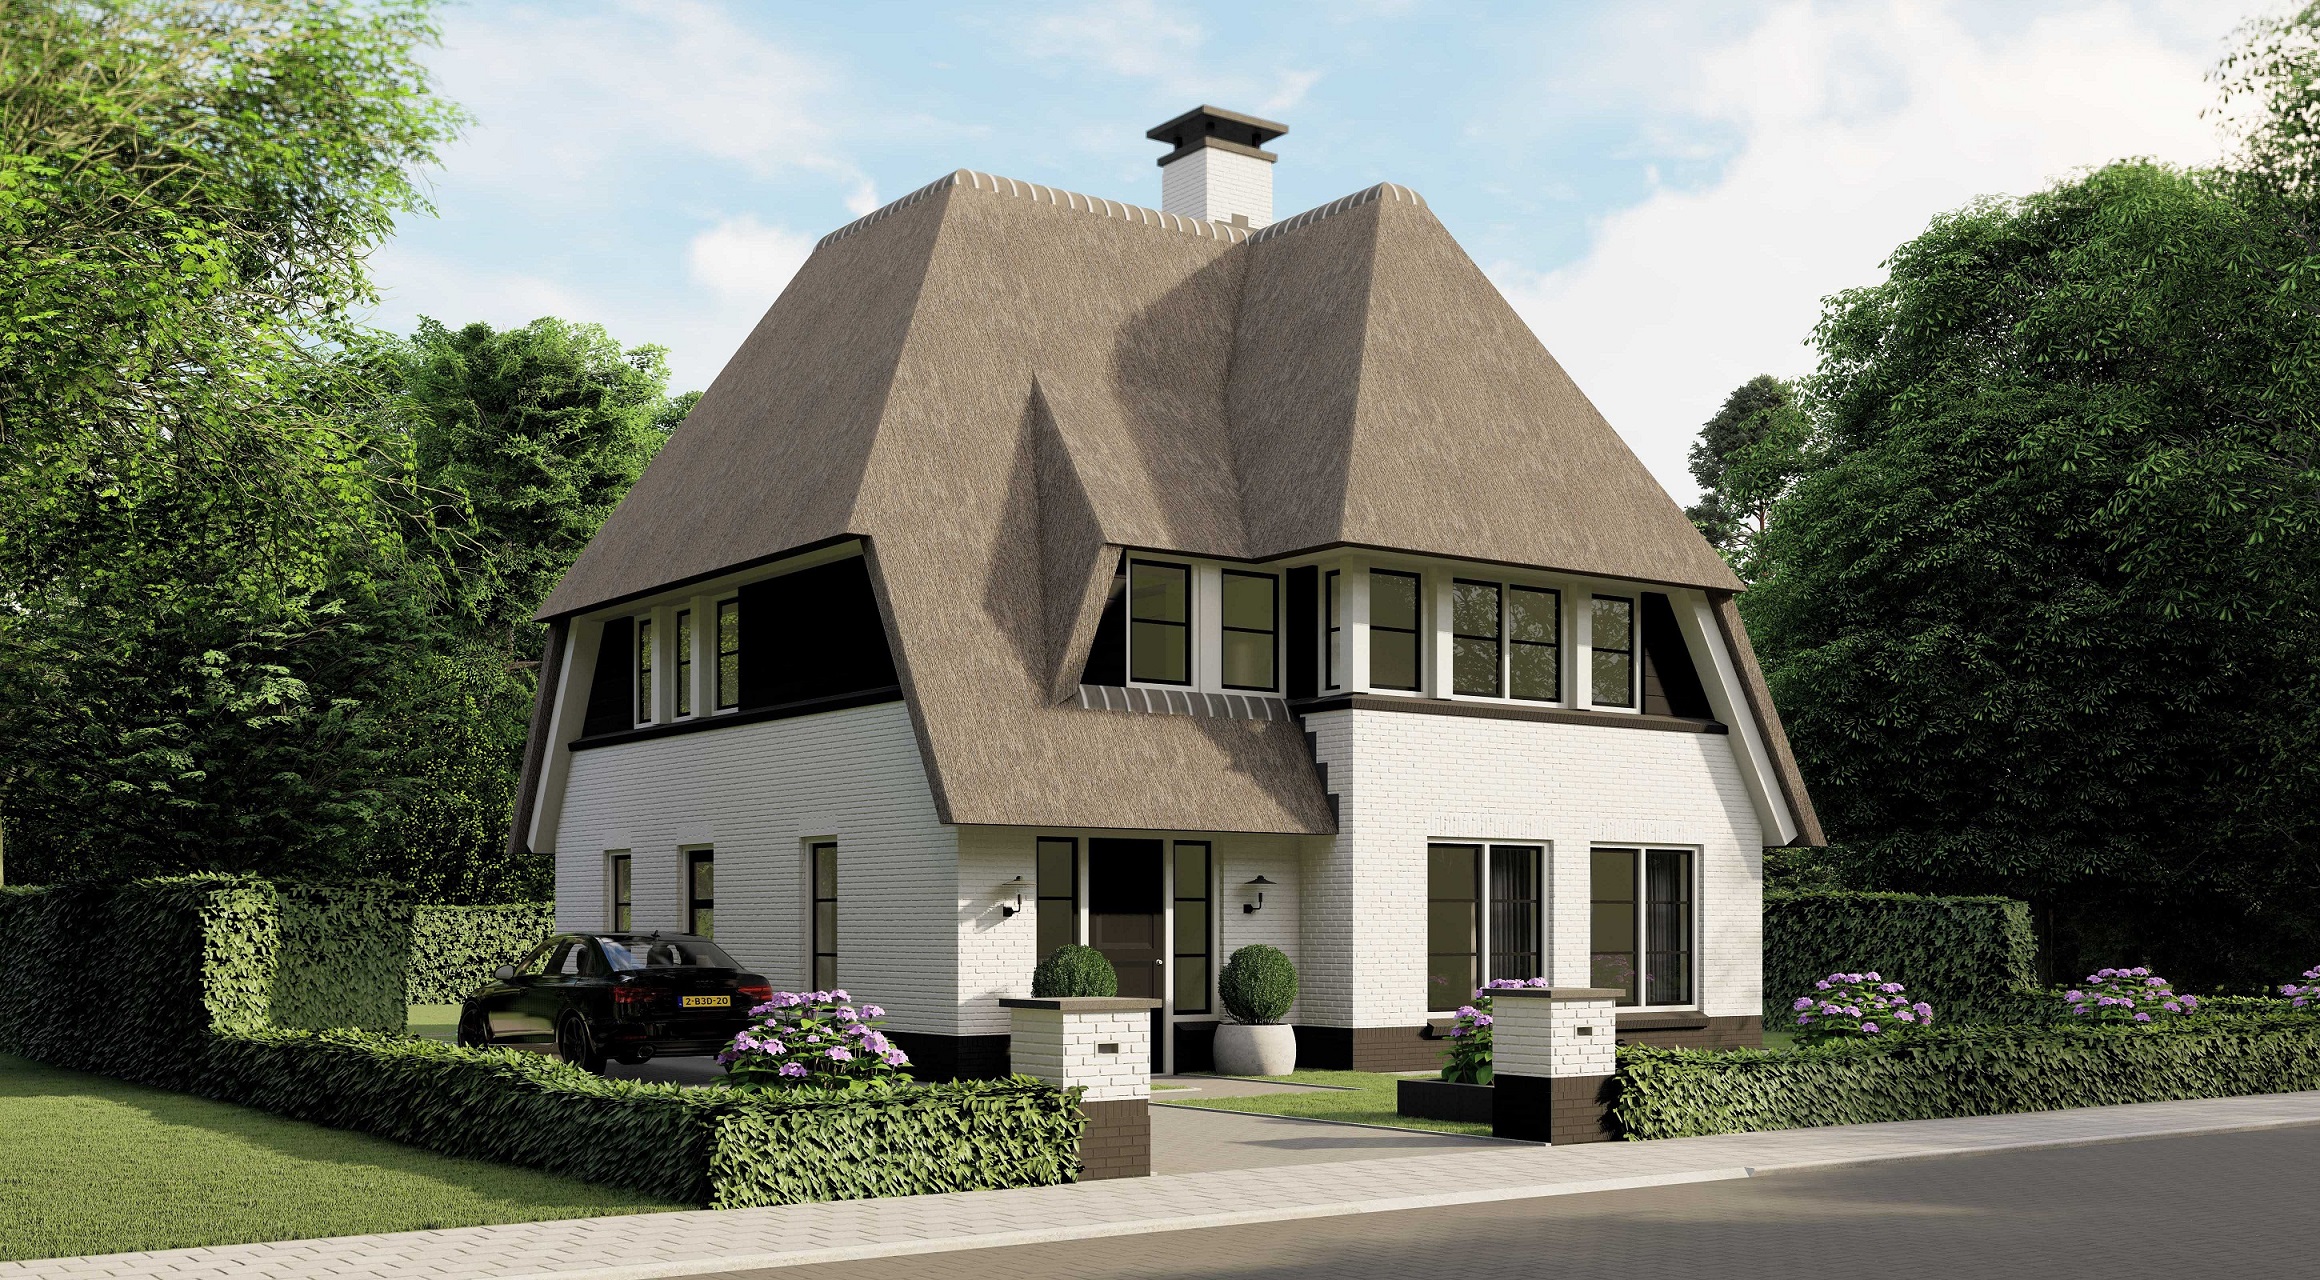 Foto: Huis bouwen  ndash  villatype Boswitje voorgevel  ndash  Architectuurwonen